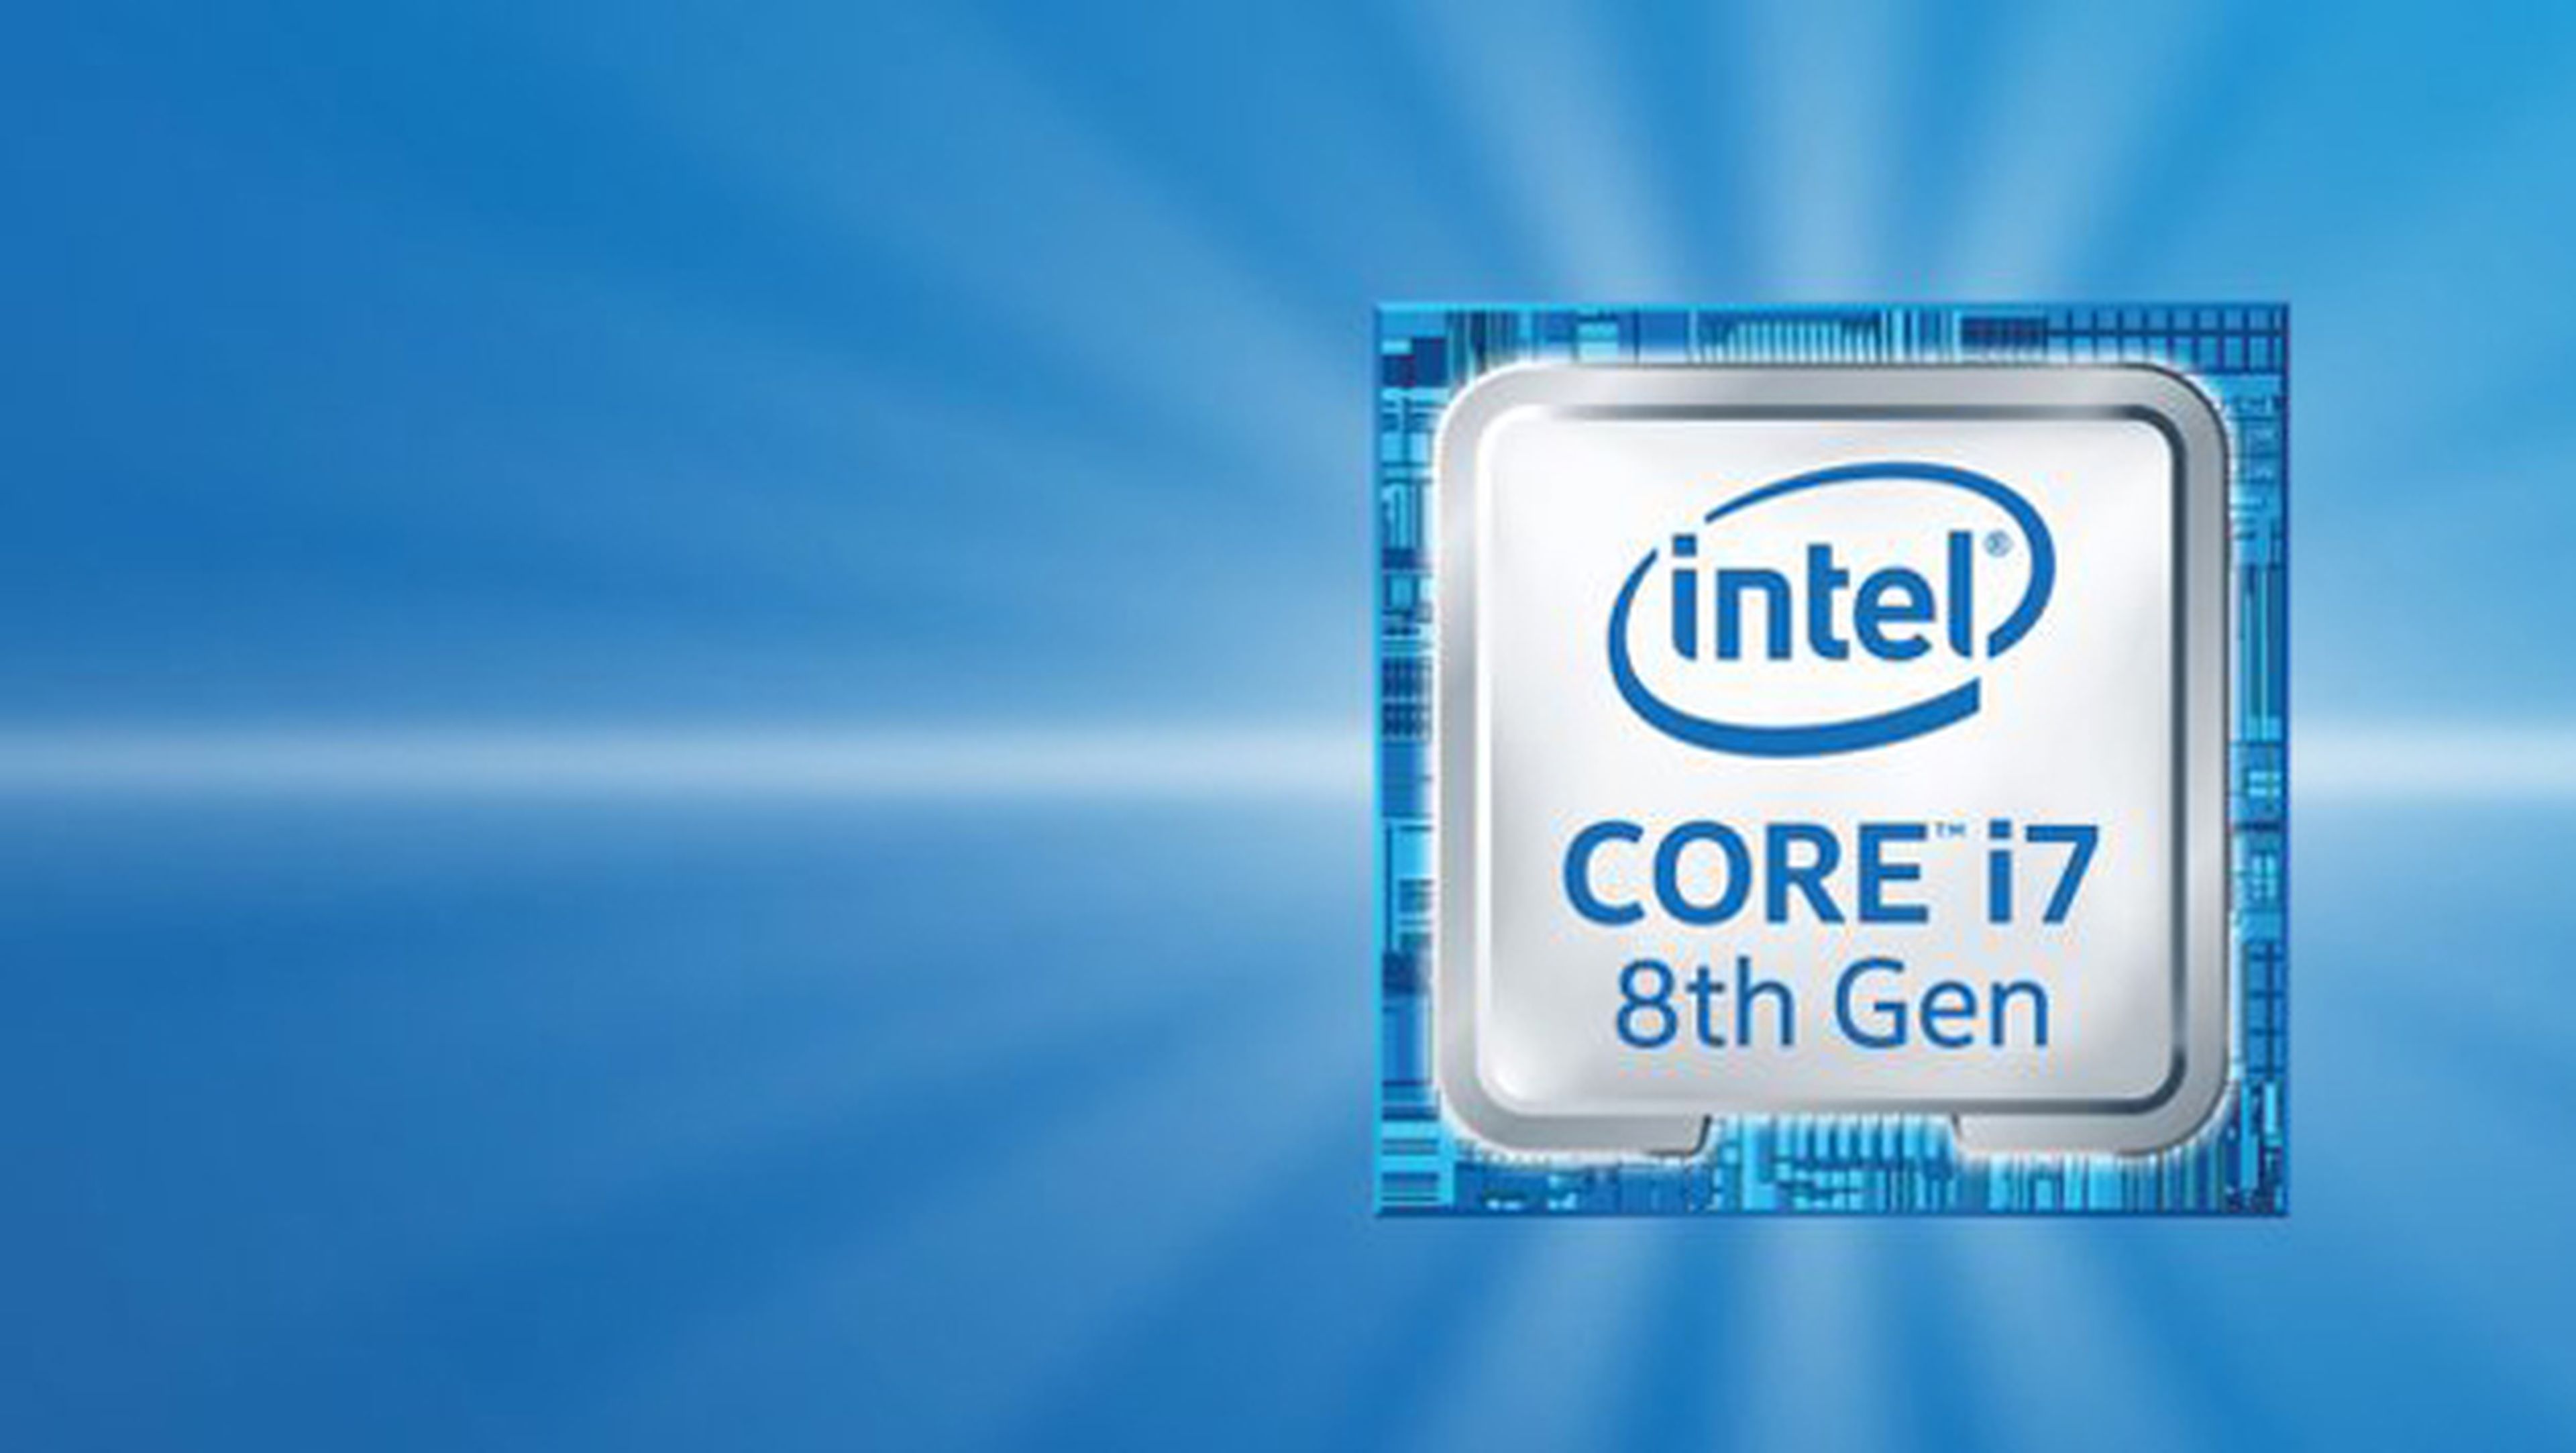 Процессор 8 Gen Intel Core i7. Core i7-8650u. Intel Core i7 7 Gen. Кристалл процессора Intel Core i7. Что делает интел